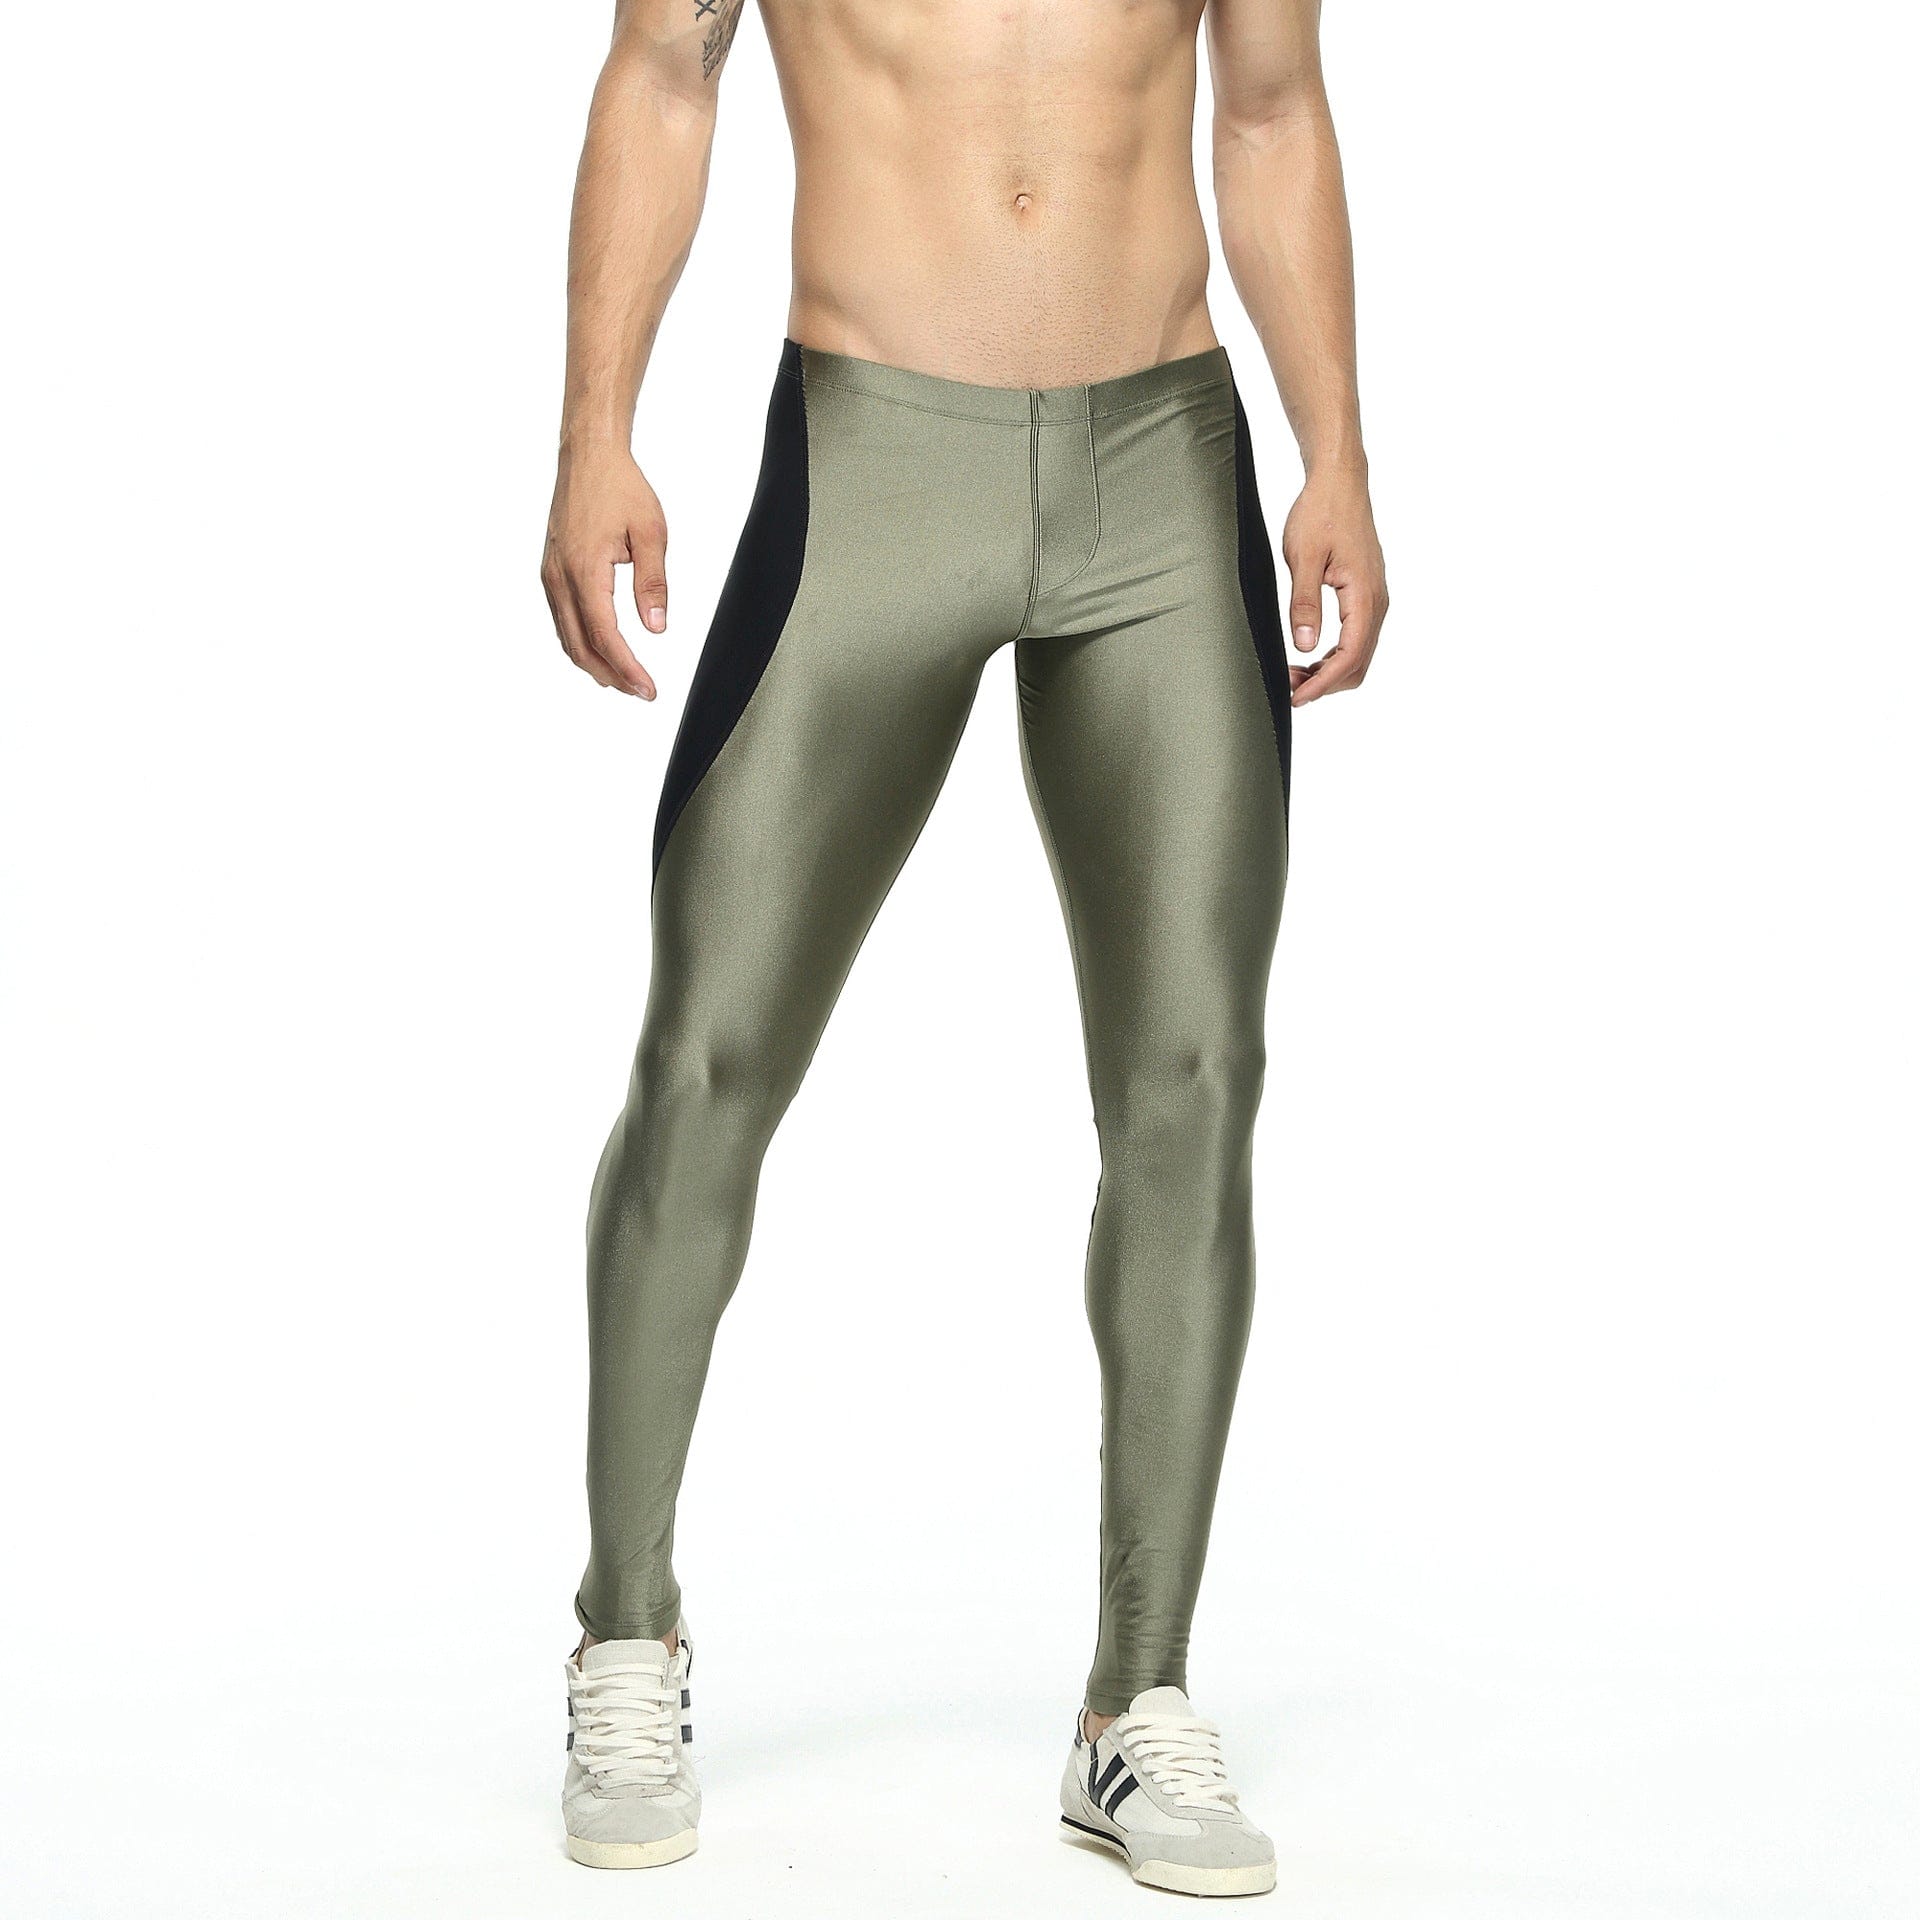 ALLRJ Men's leggings Nylon Men's Gym Pants Ninth